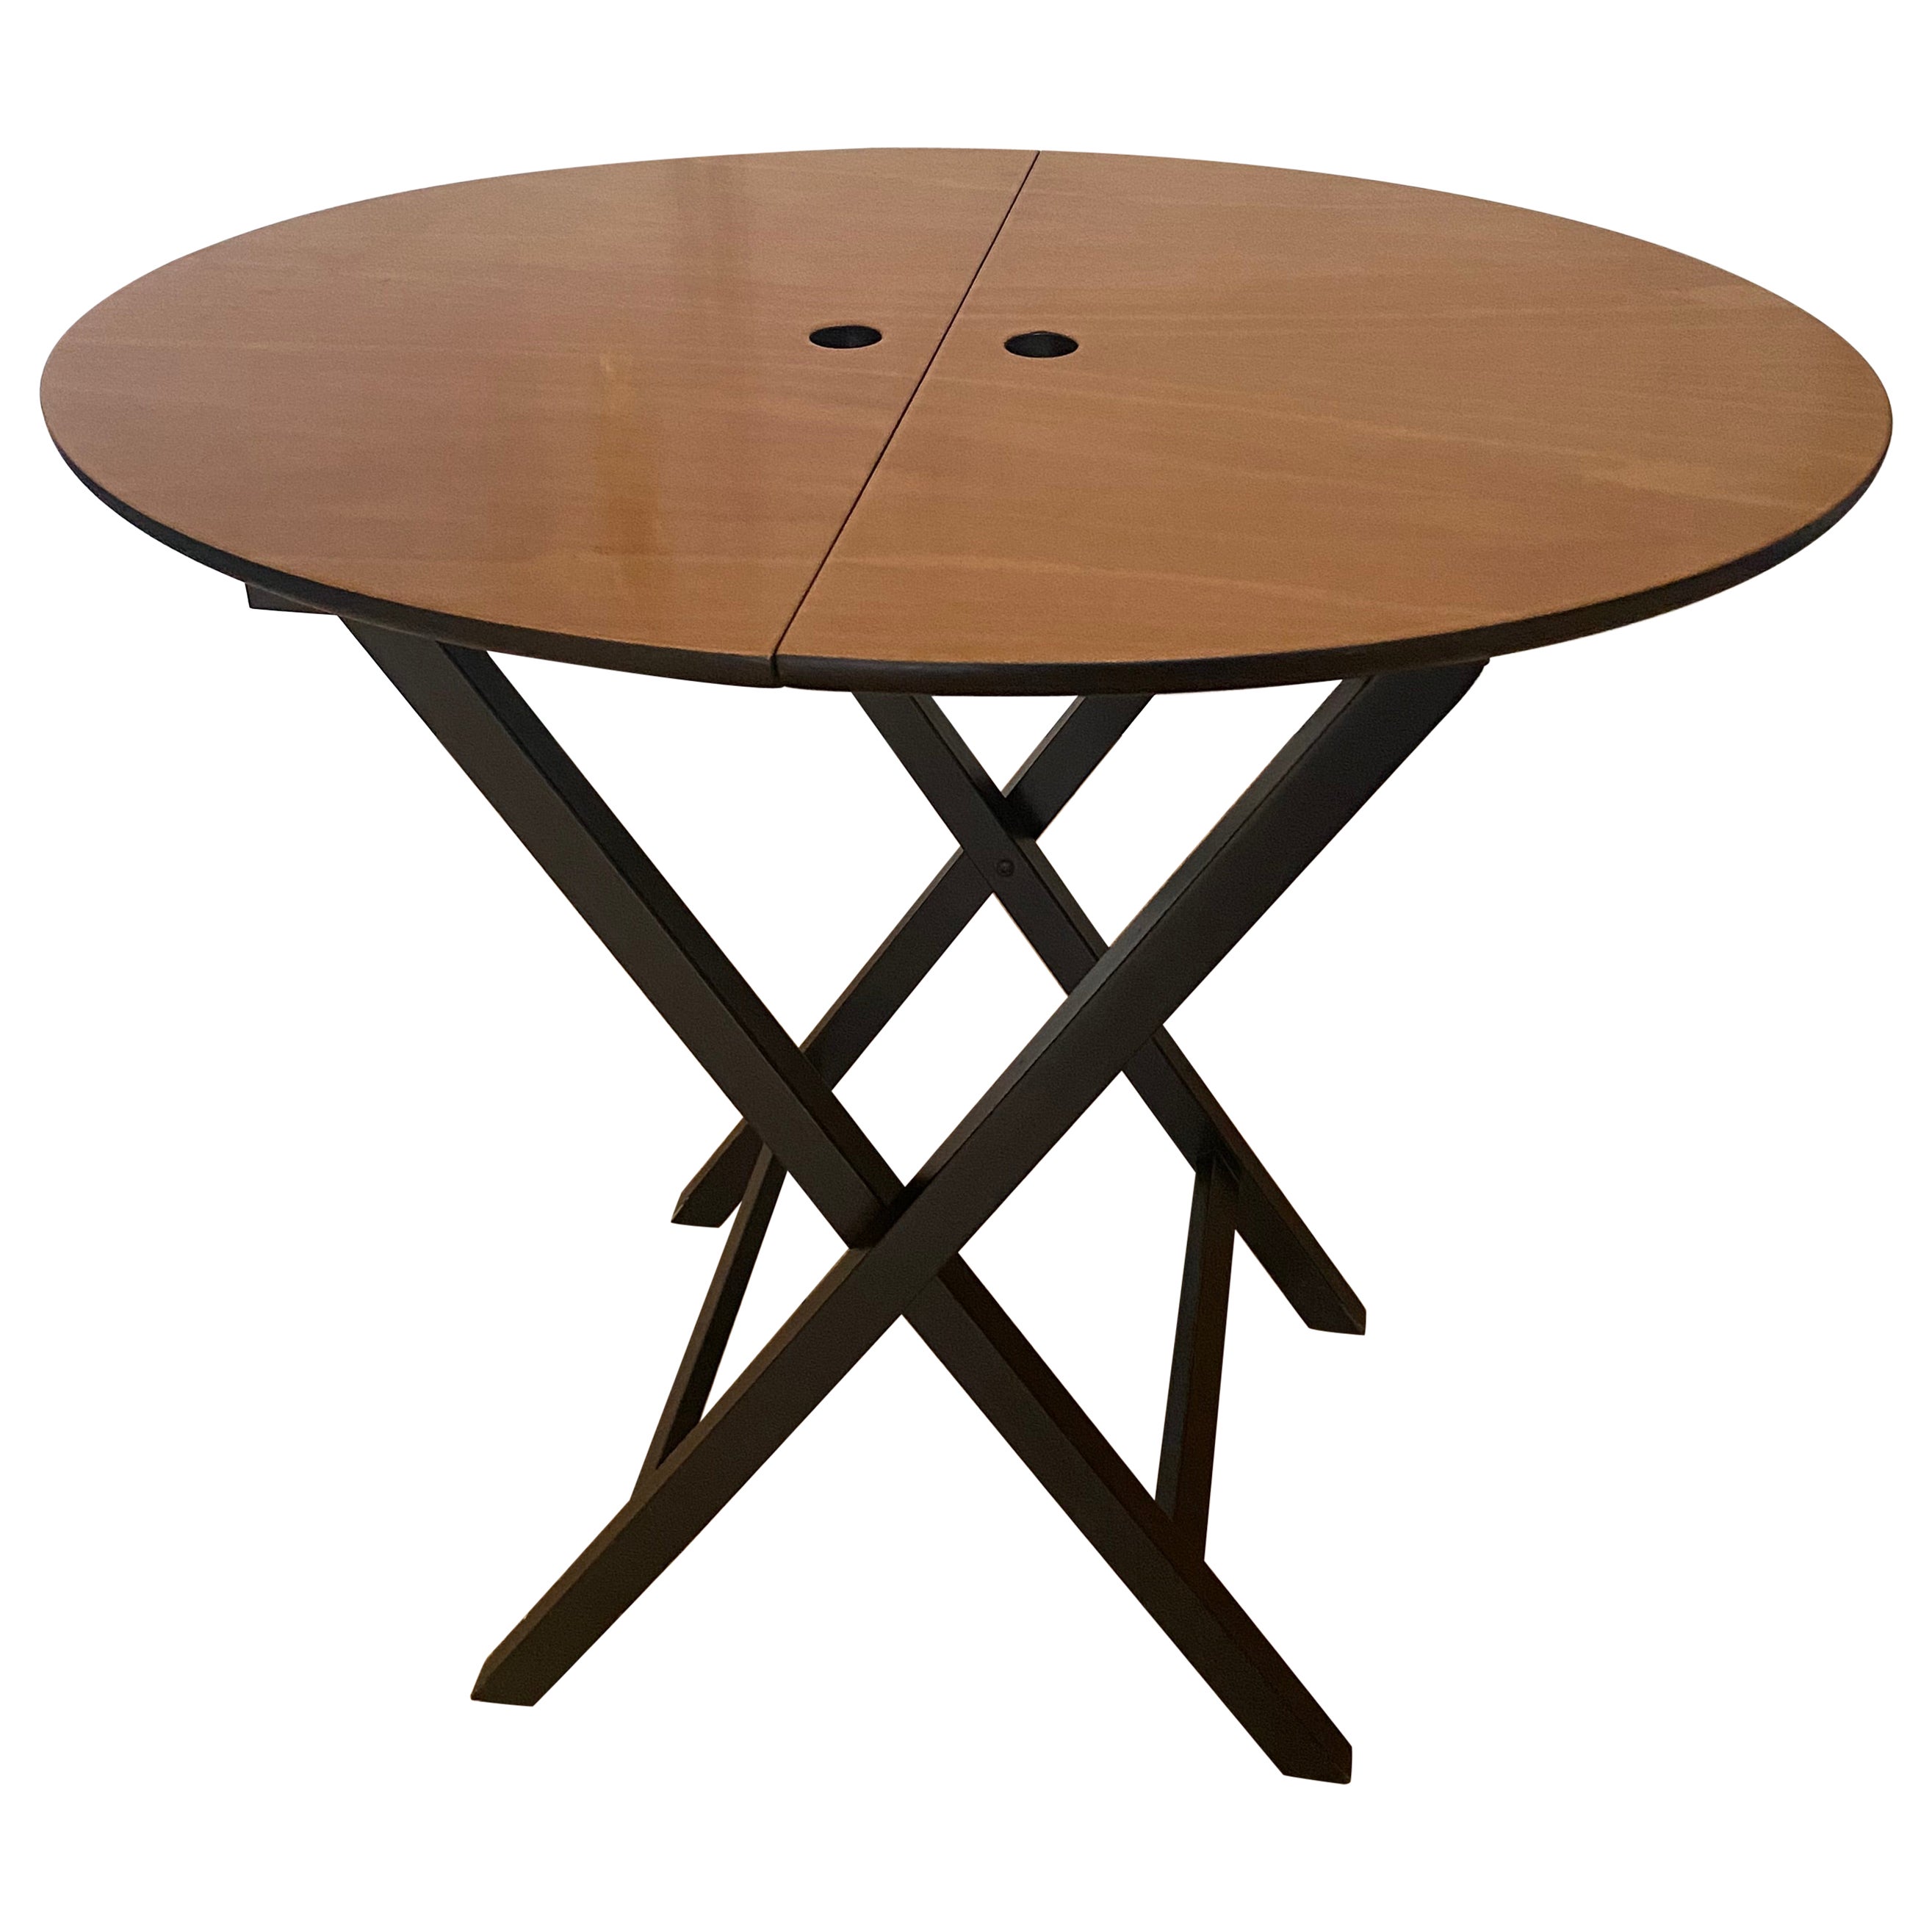 "Battista Folding" Table by Romeo Sozzi/ Promemoria with Cherry Wood Surface